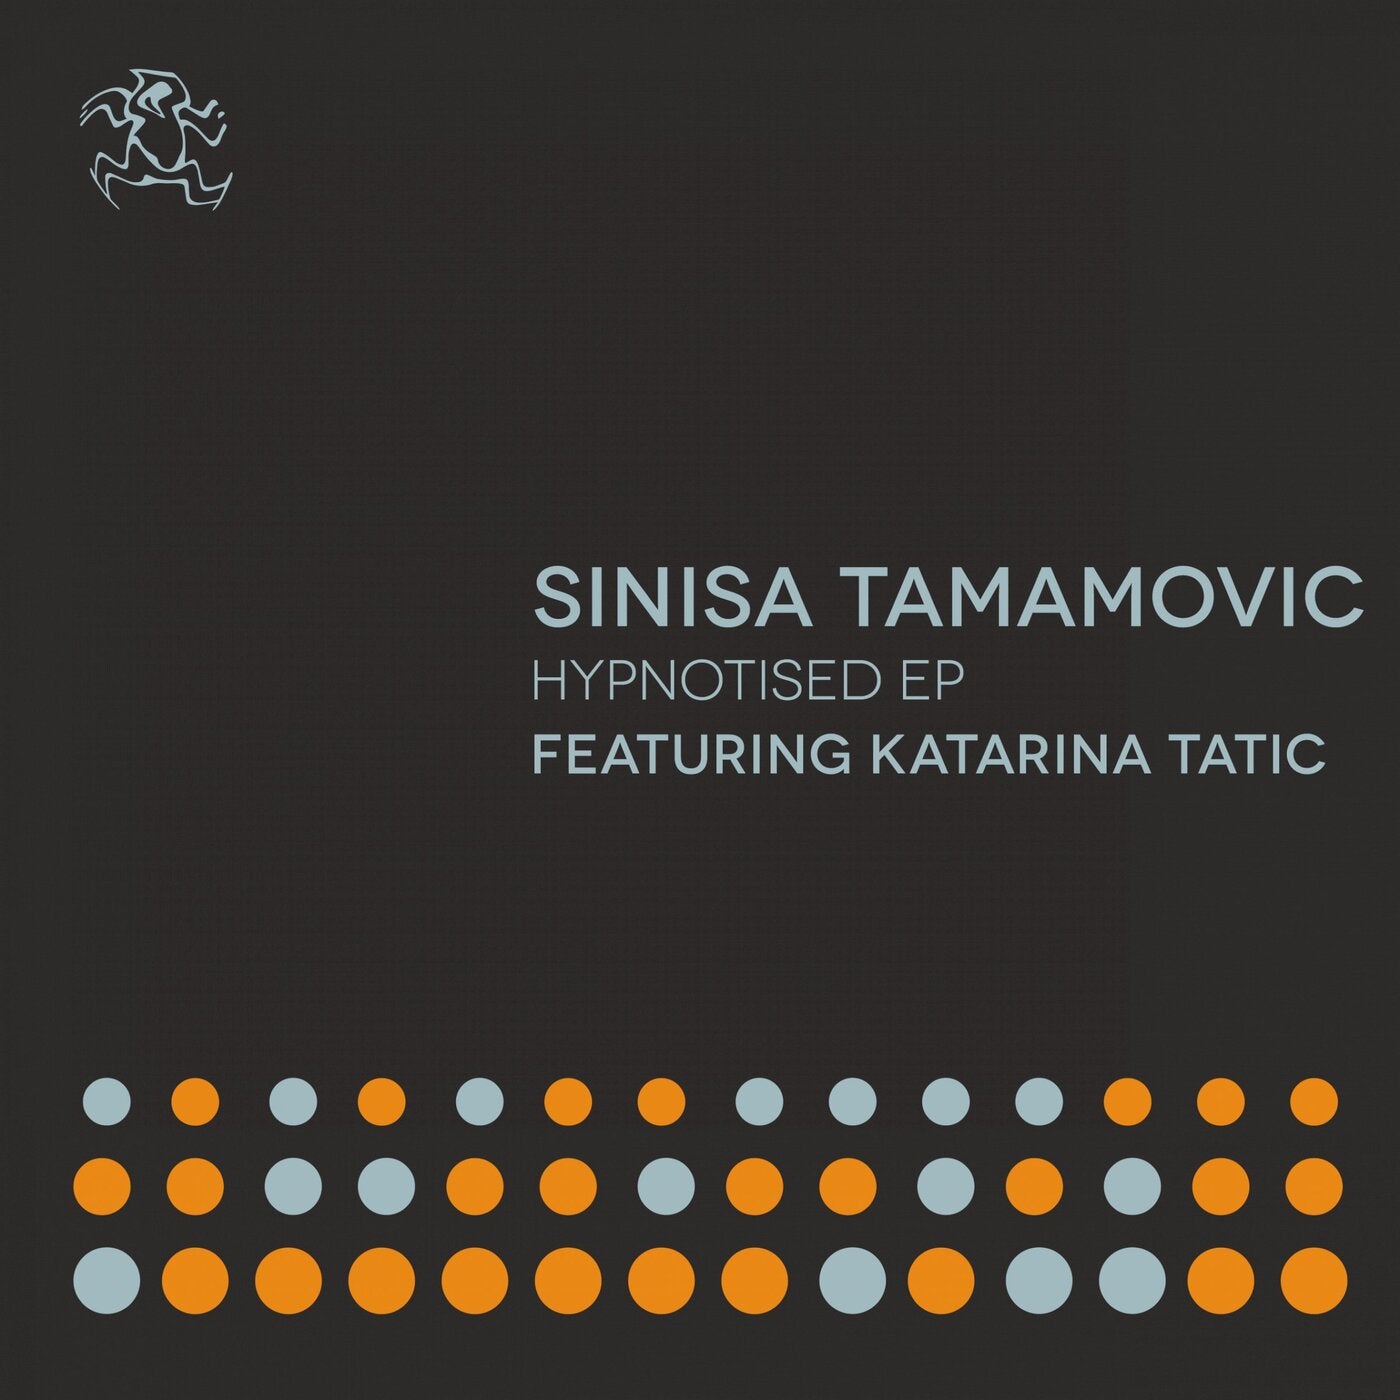 image cover: Sinisa Tamamovic, Katarina Tatic - Hypnotised EP / YR283